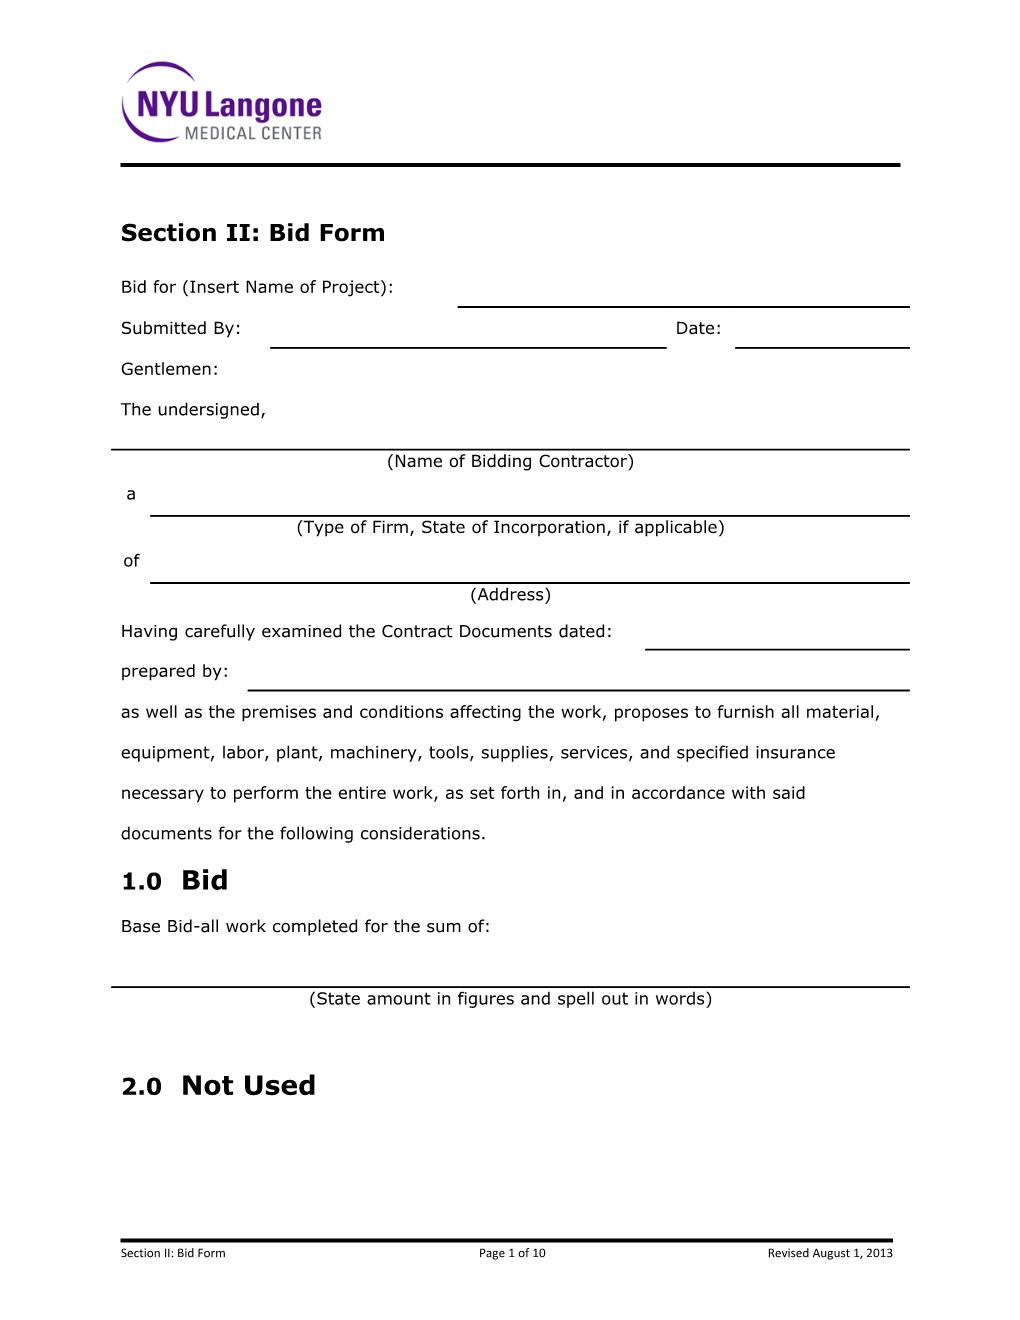 Section II: Bid Form